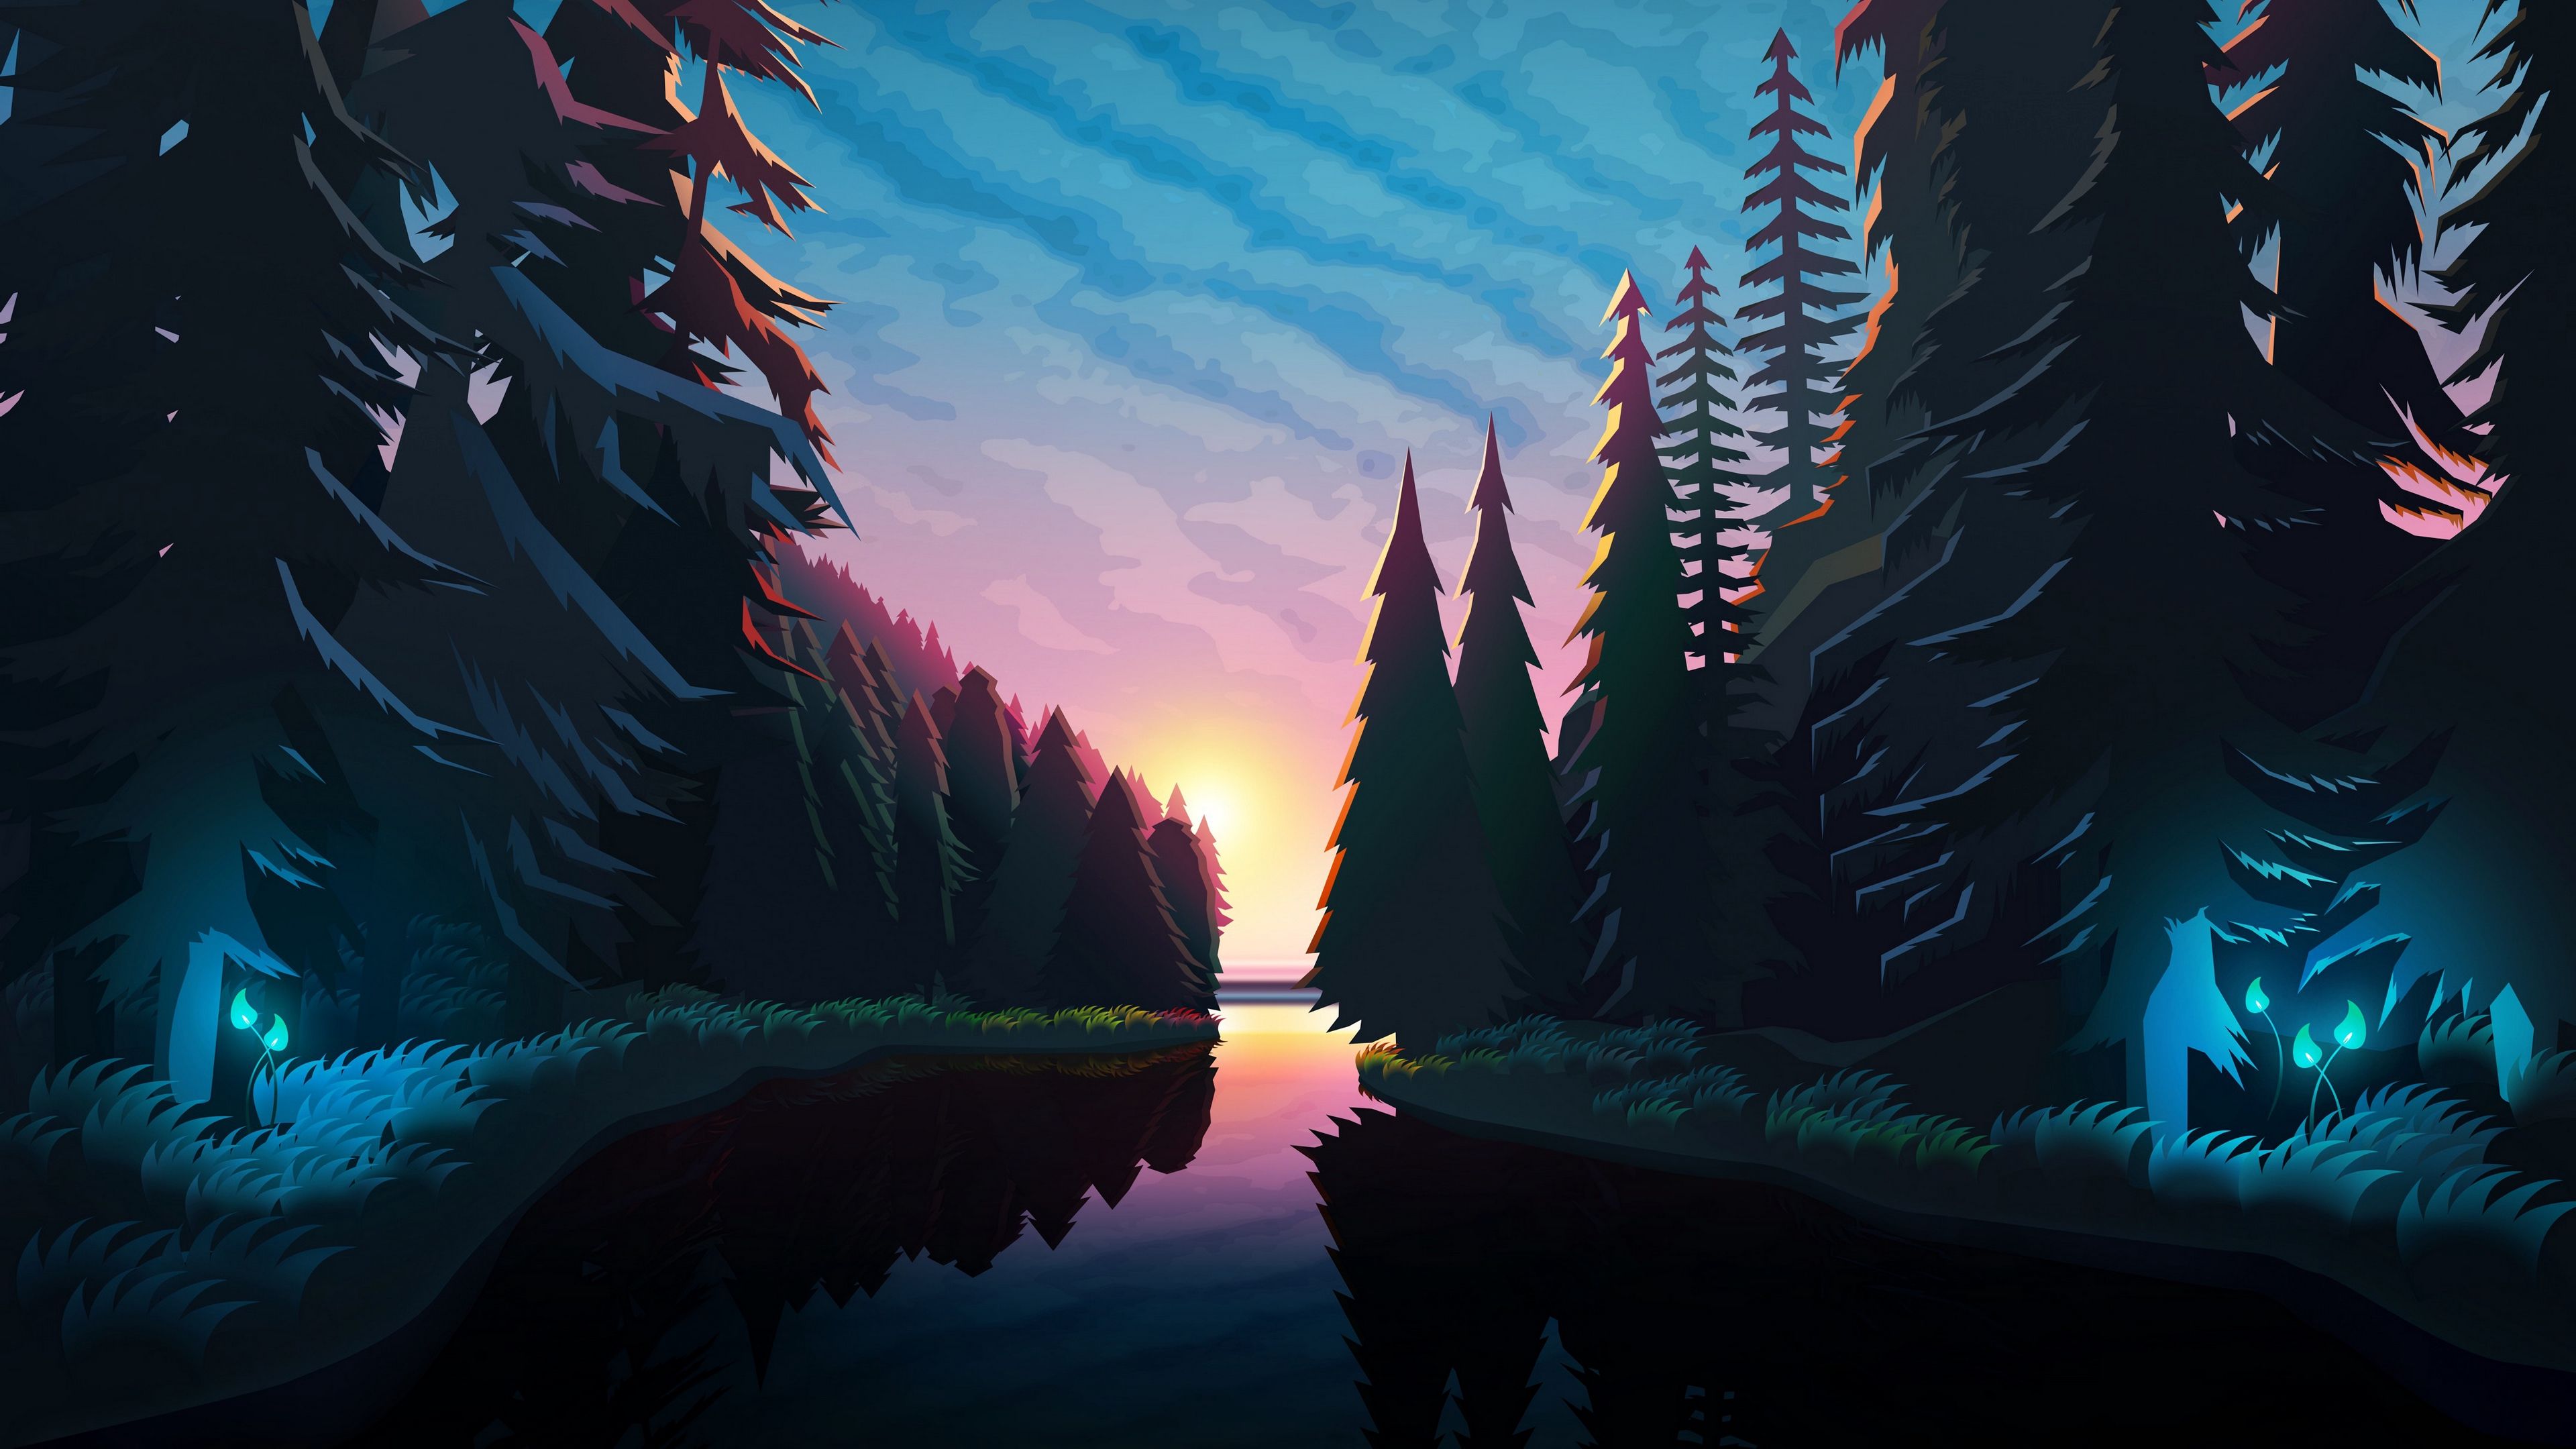 Animated Nature Wallpaper 4k - Animated Landscape Wallpapers | Bocainwasul